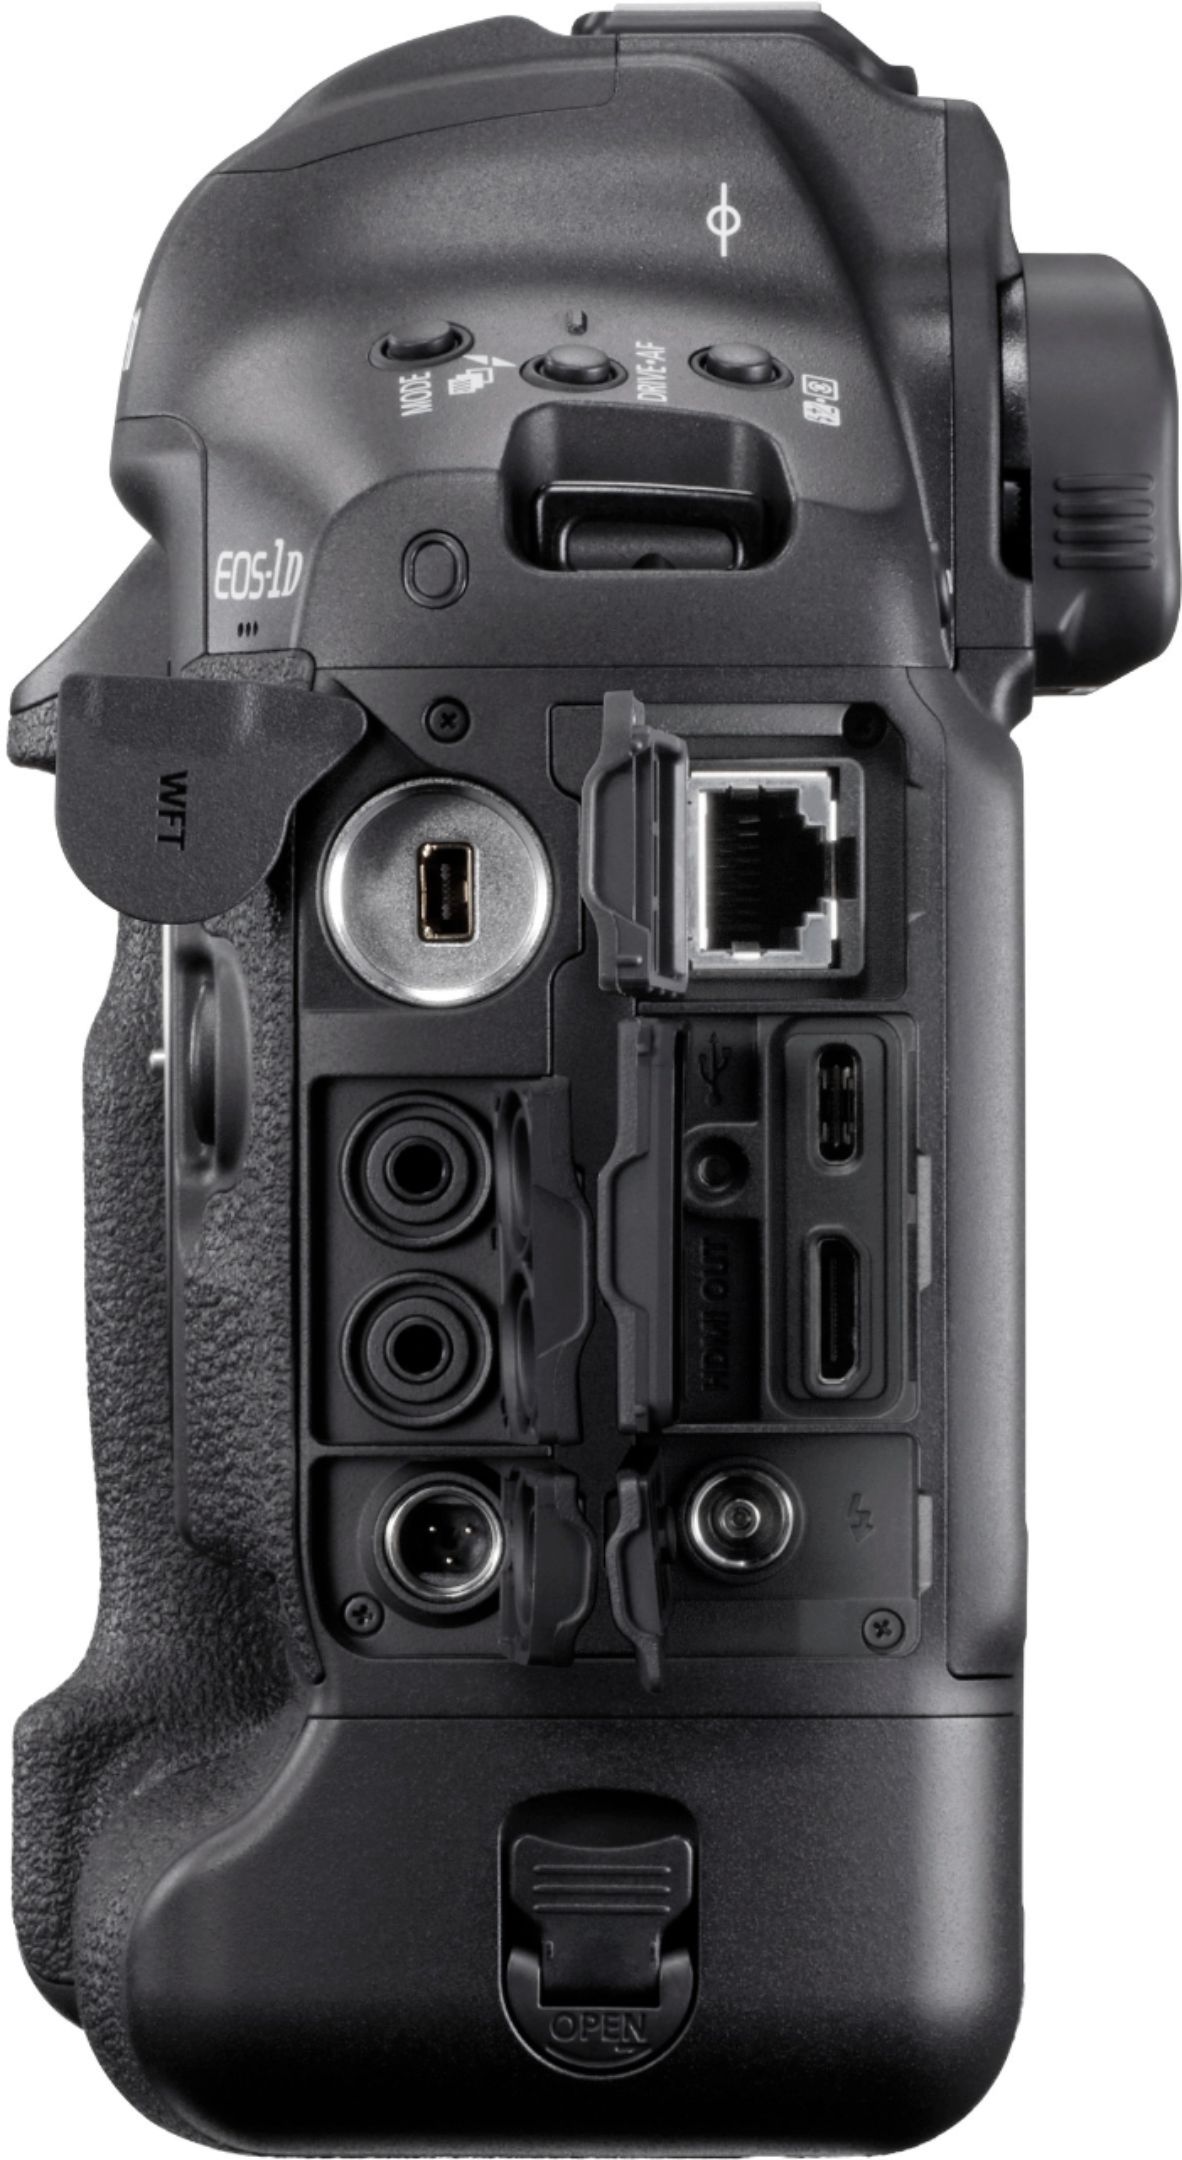 Canon EOS-1D X Mark III DSLR Camera (Body Only) Black 3829C002 - Best Buy